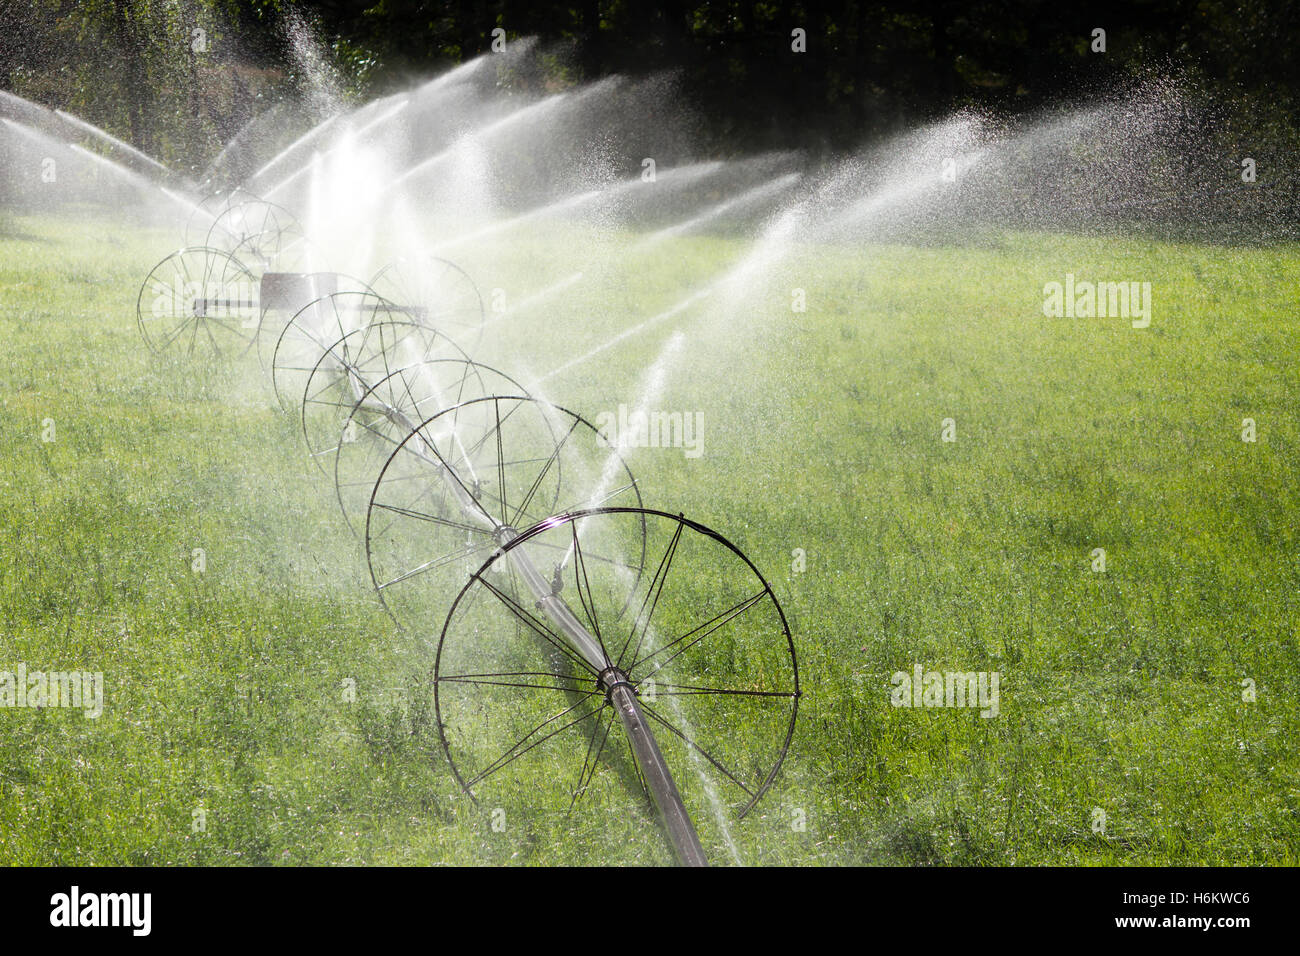 Water Reel Irrigation Systems/Mobile Wheel Agricultural Sprinkler